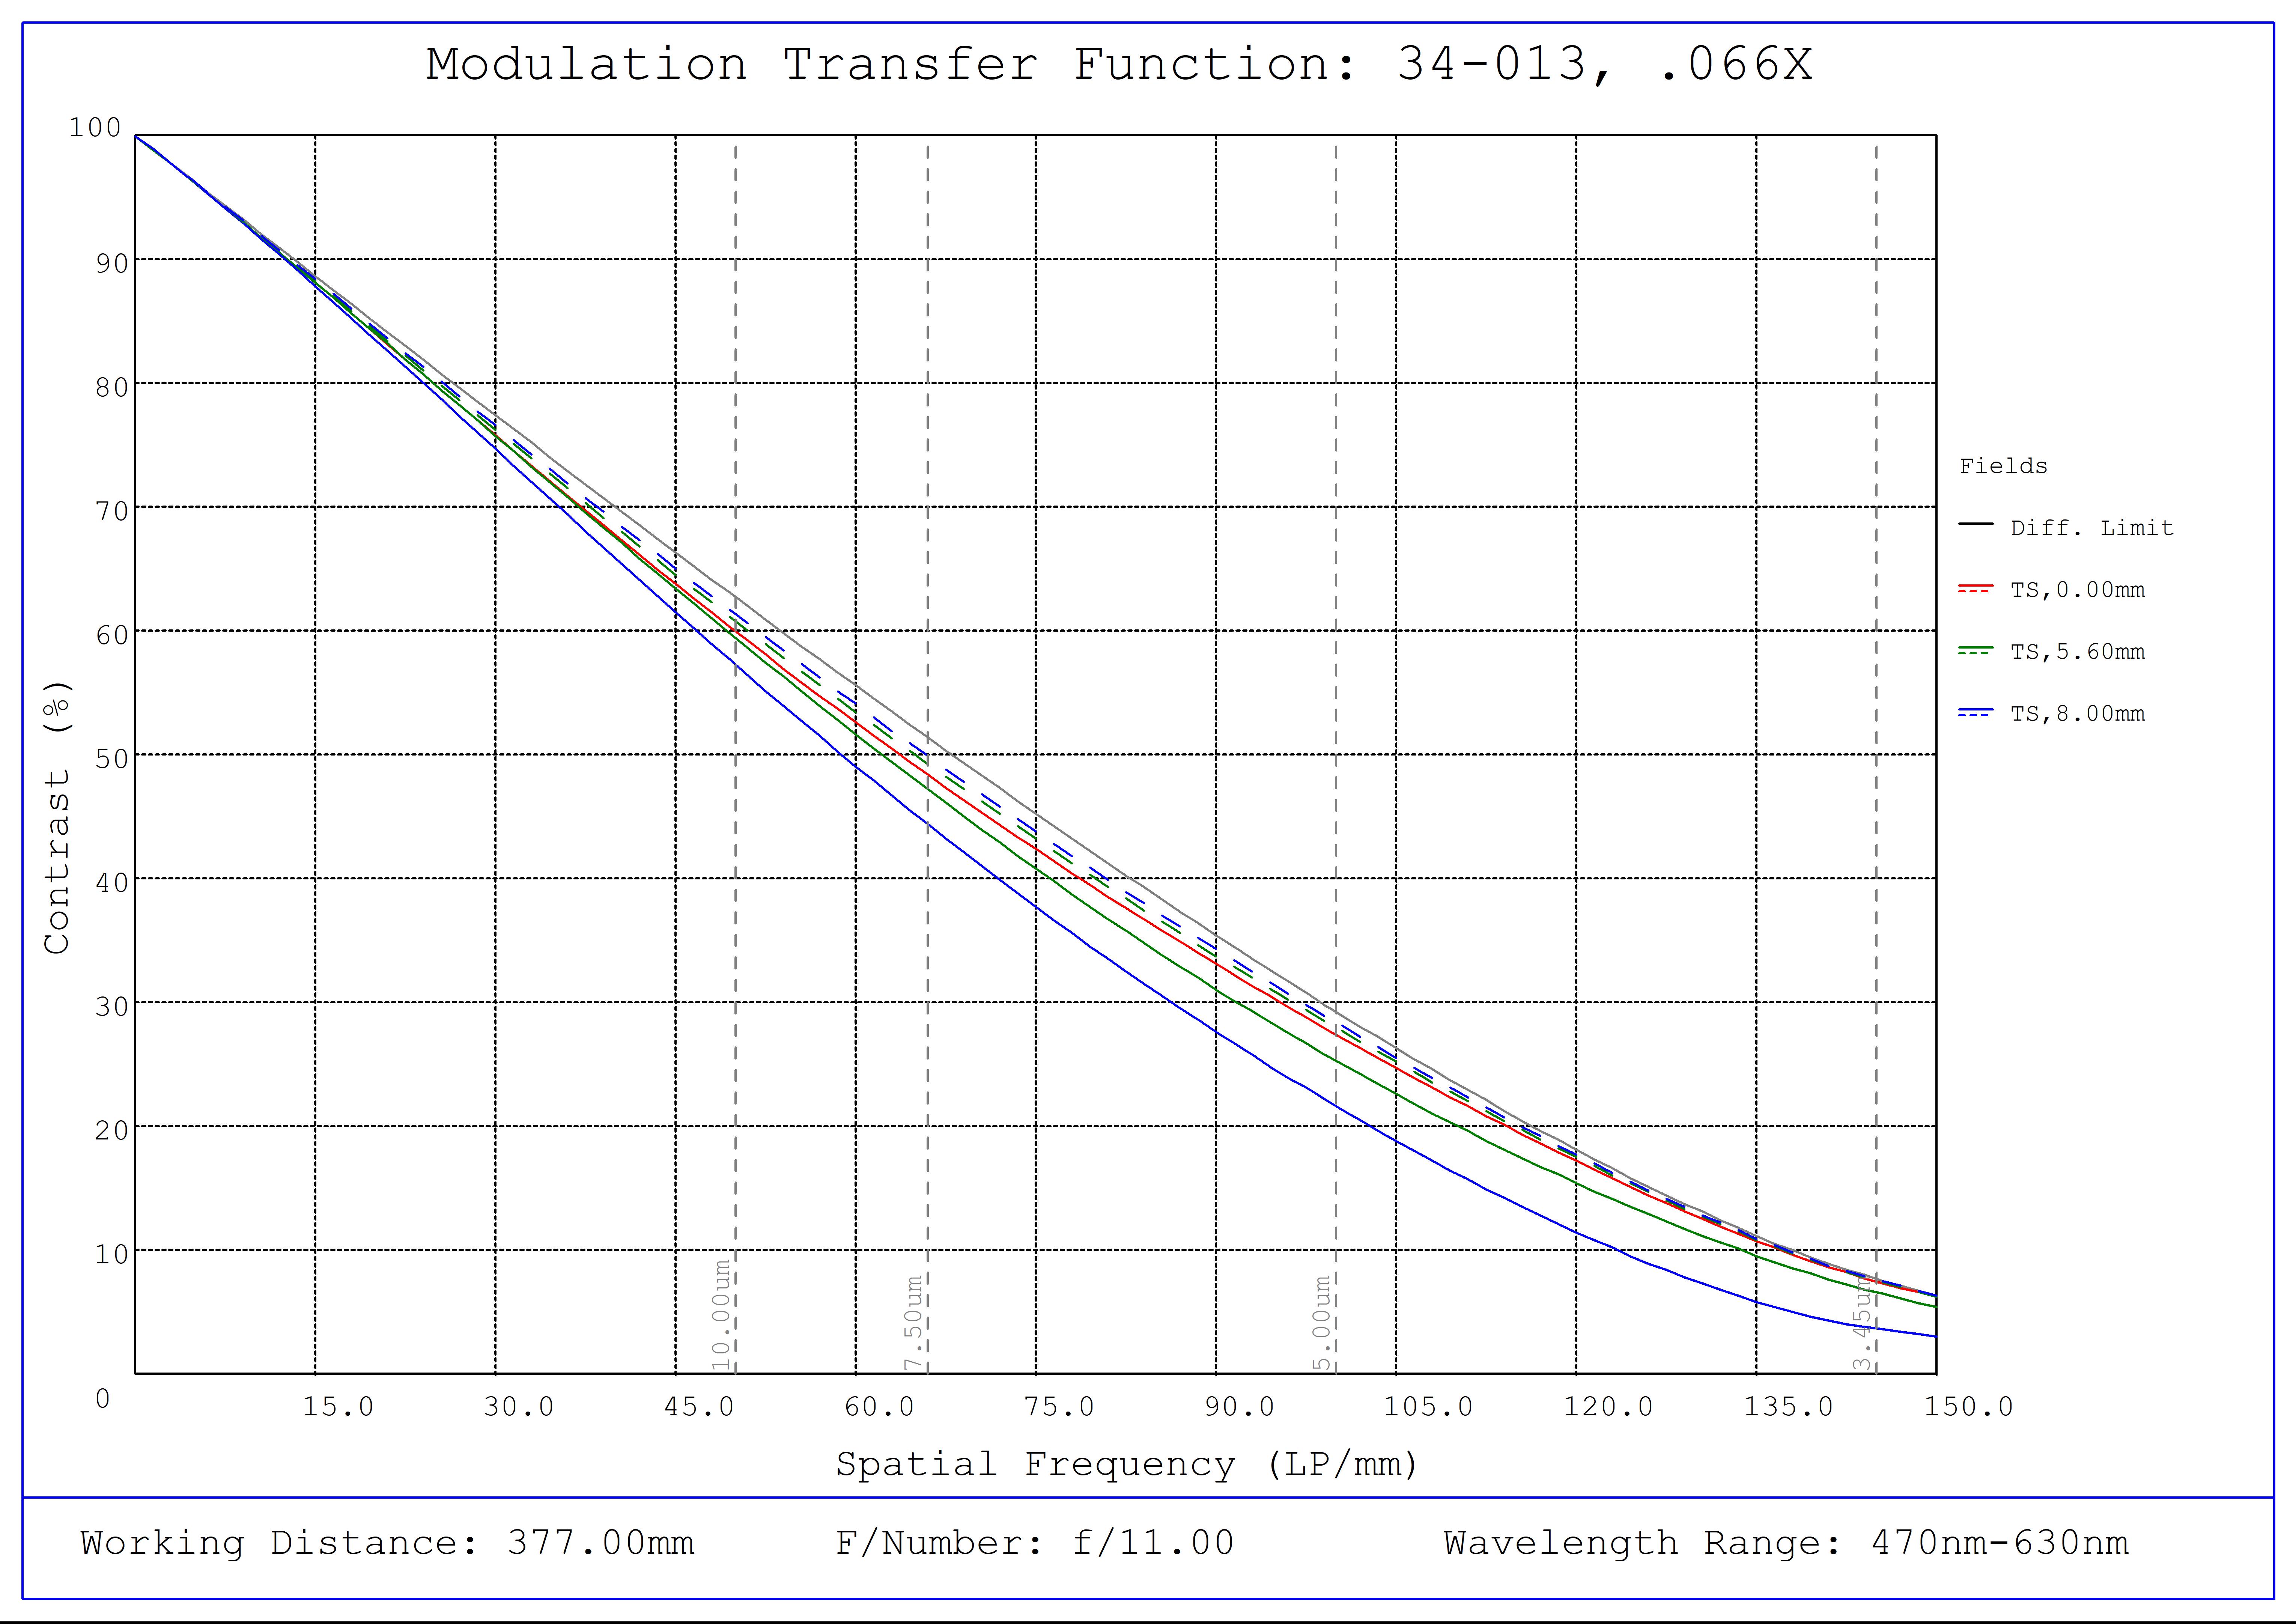 #34-013, 0.066X, 1" C-Mount TitanTL® Telecentric Lens, Modulated Transfer Function (MTF) Plot, 377mm Working Distance, f11